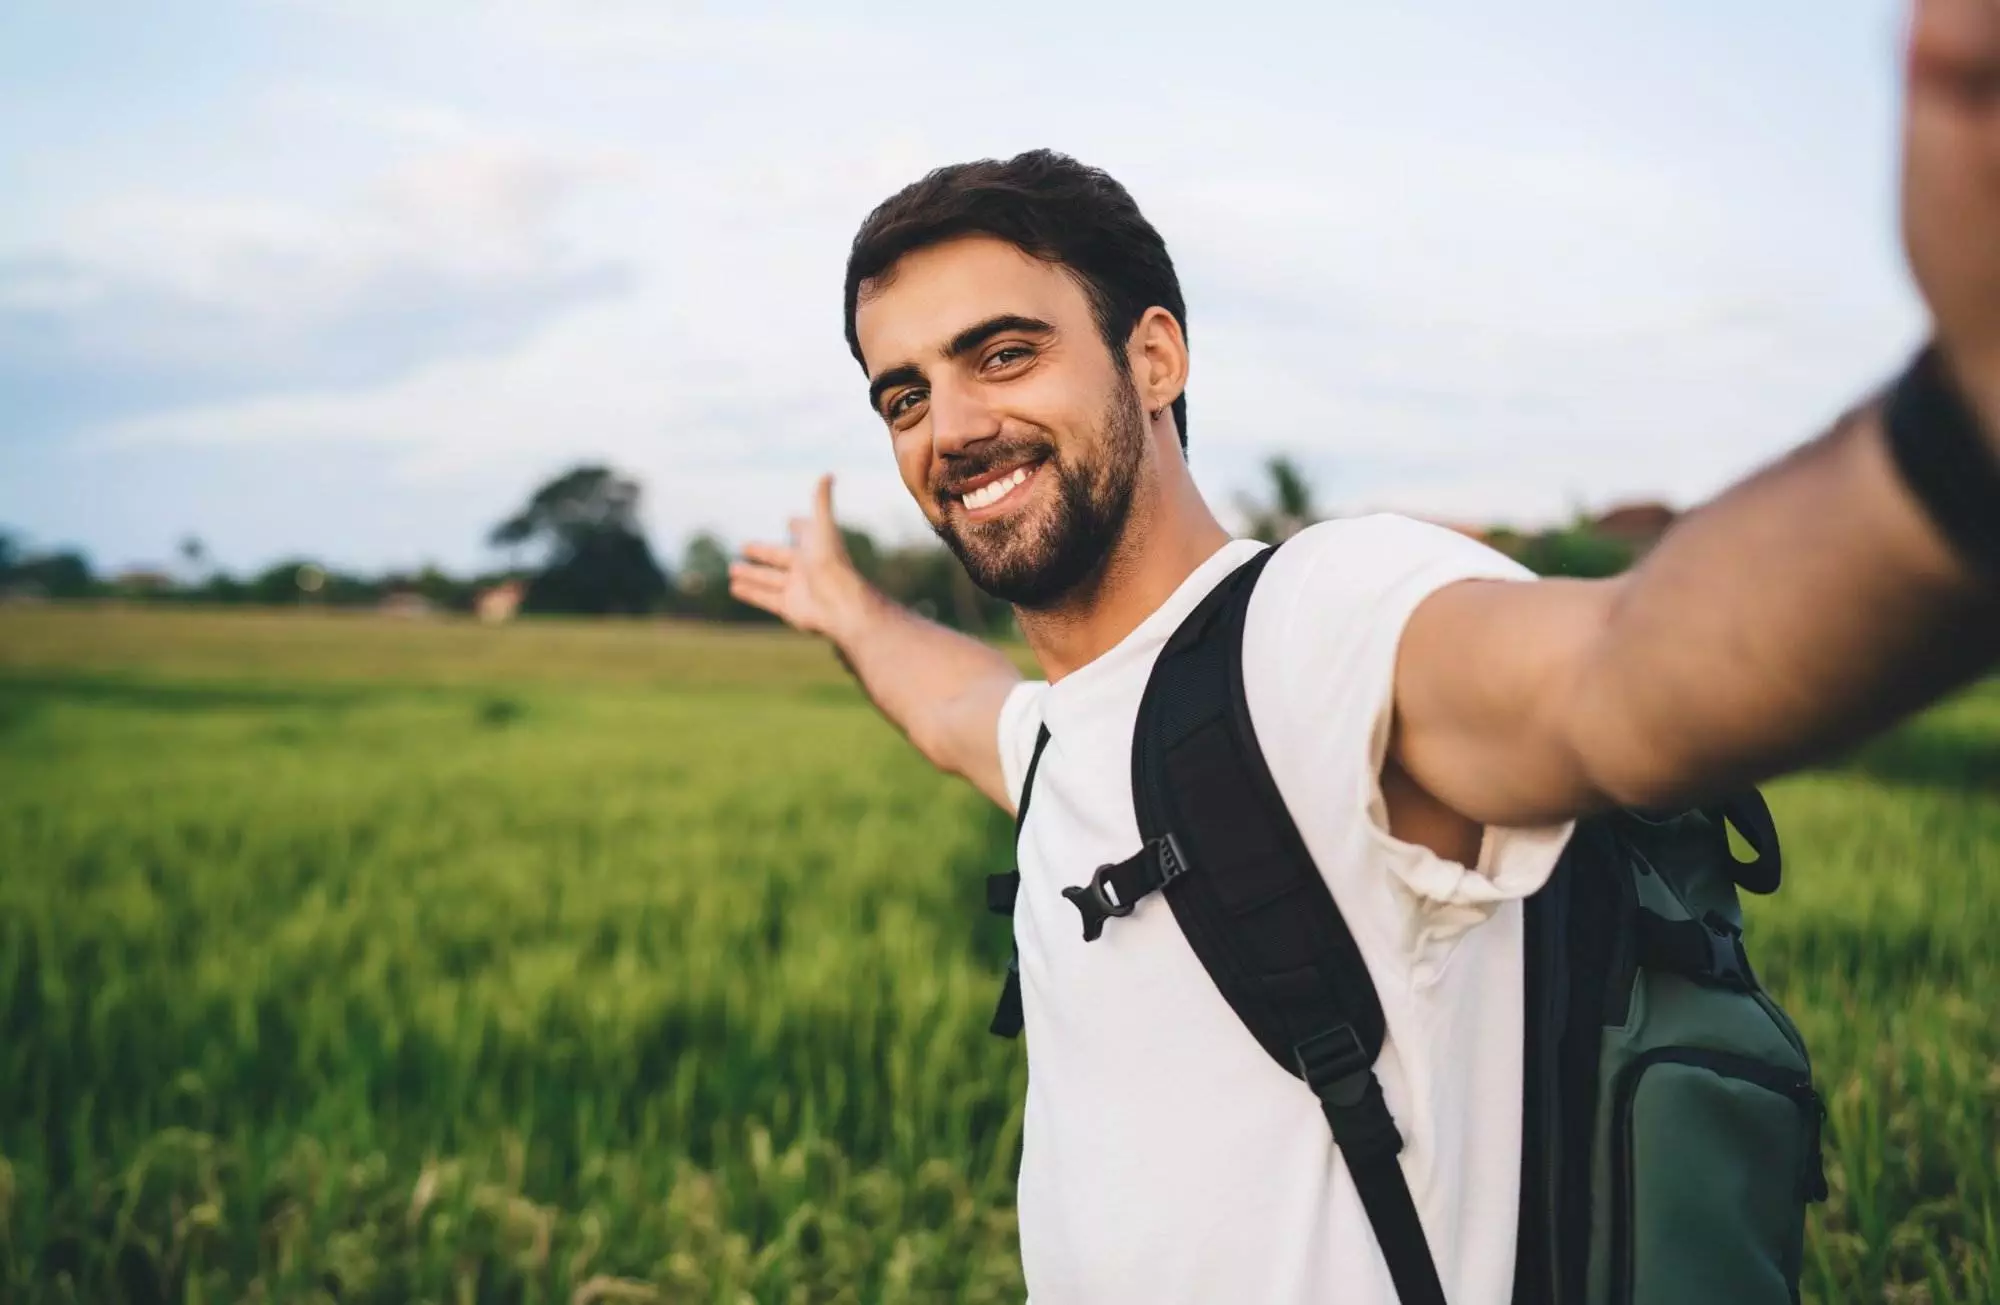 Man taking selfie in green field with backpack.